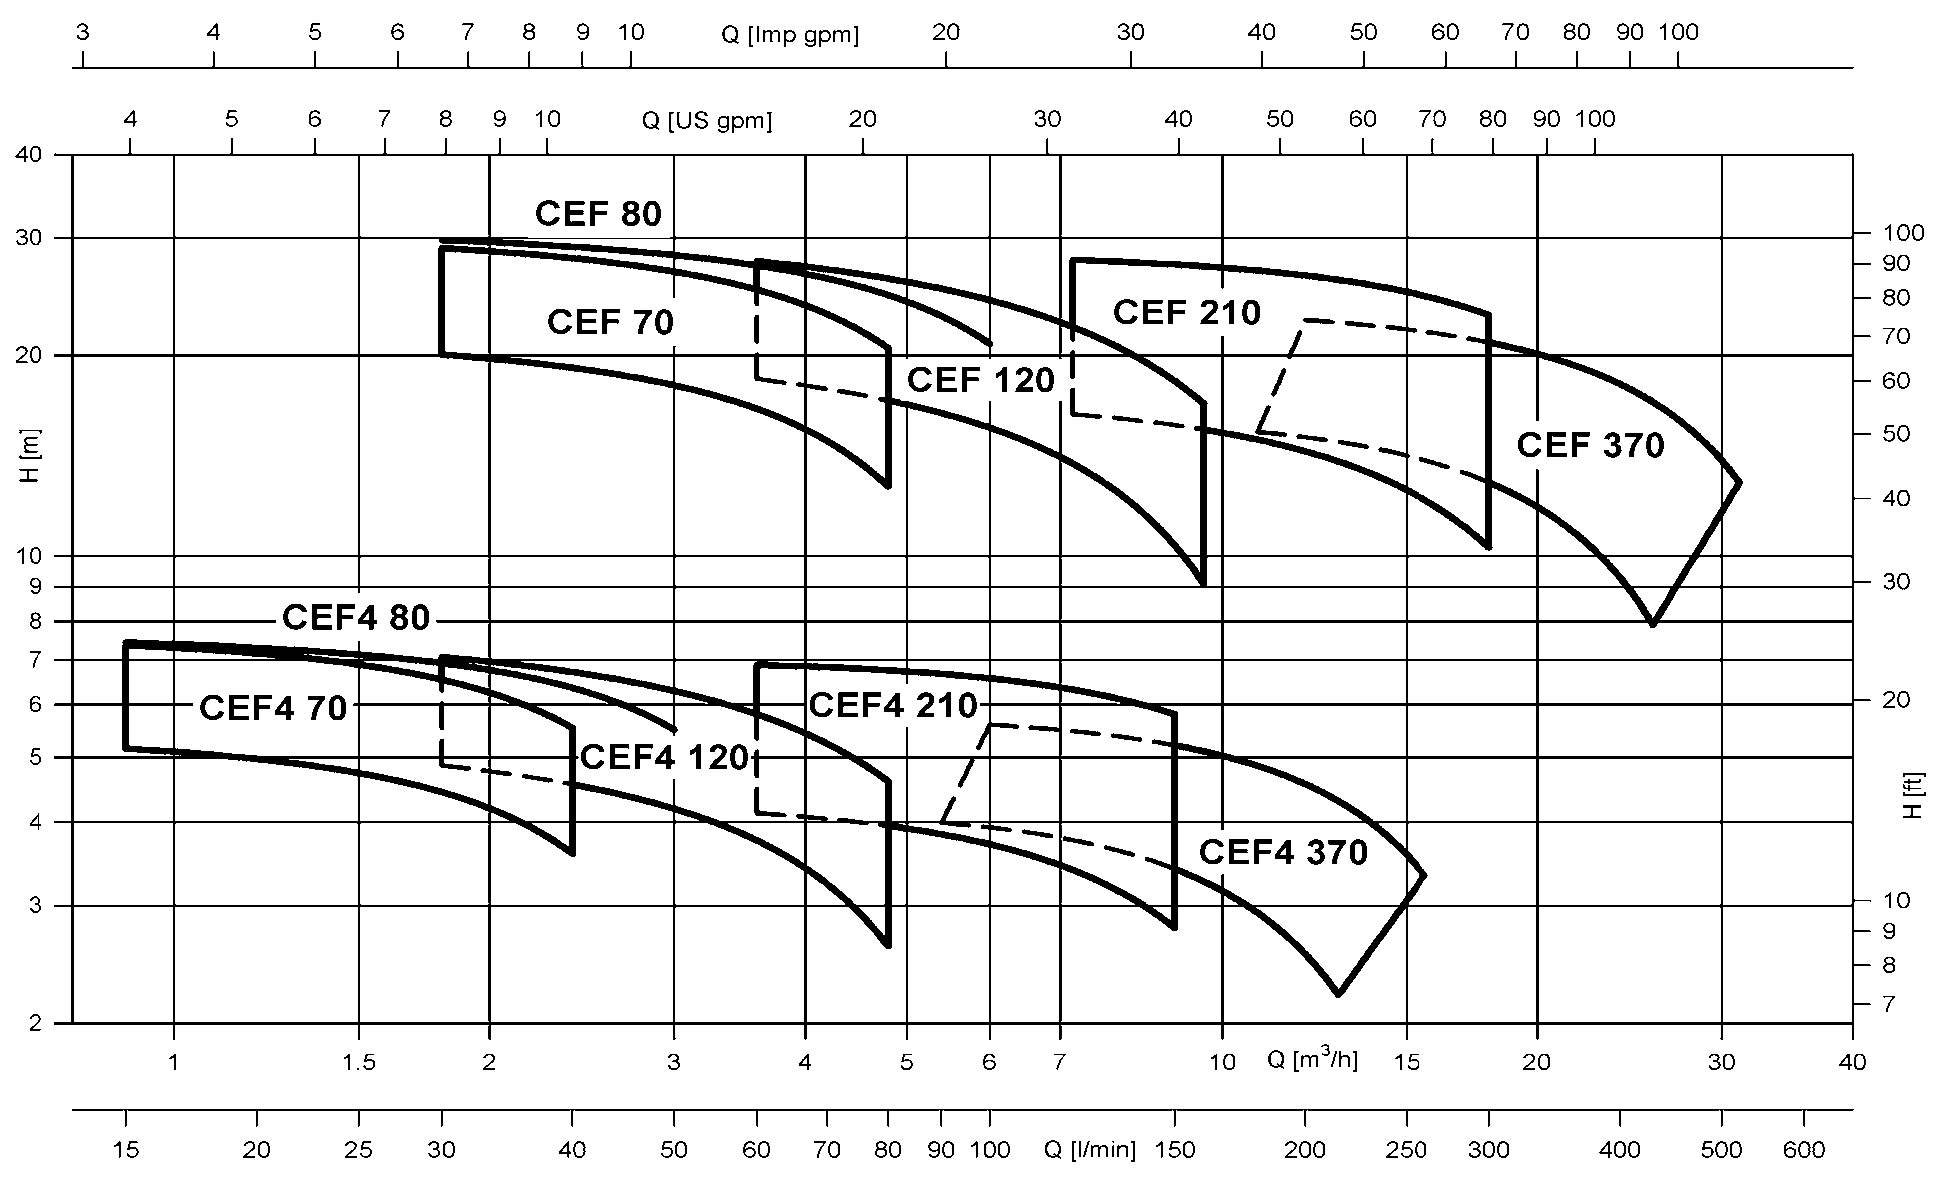 نمودار آبدهی پمپ لوارا سری CEF